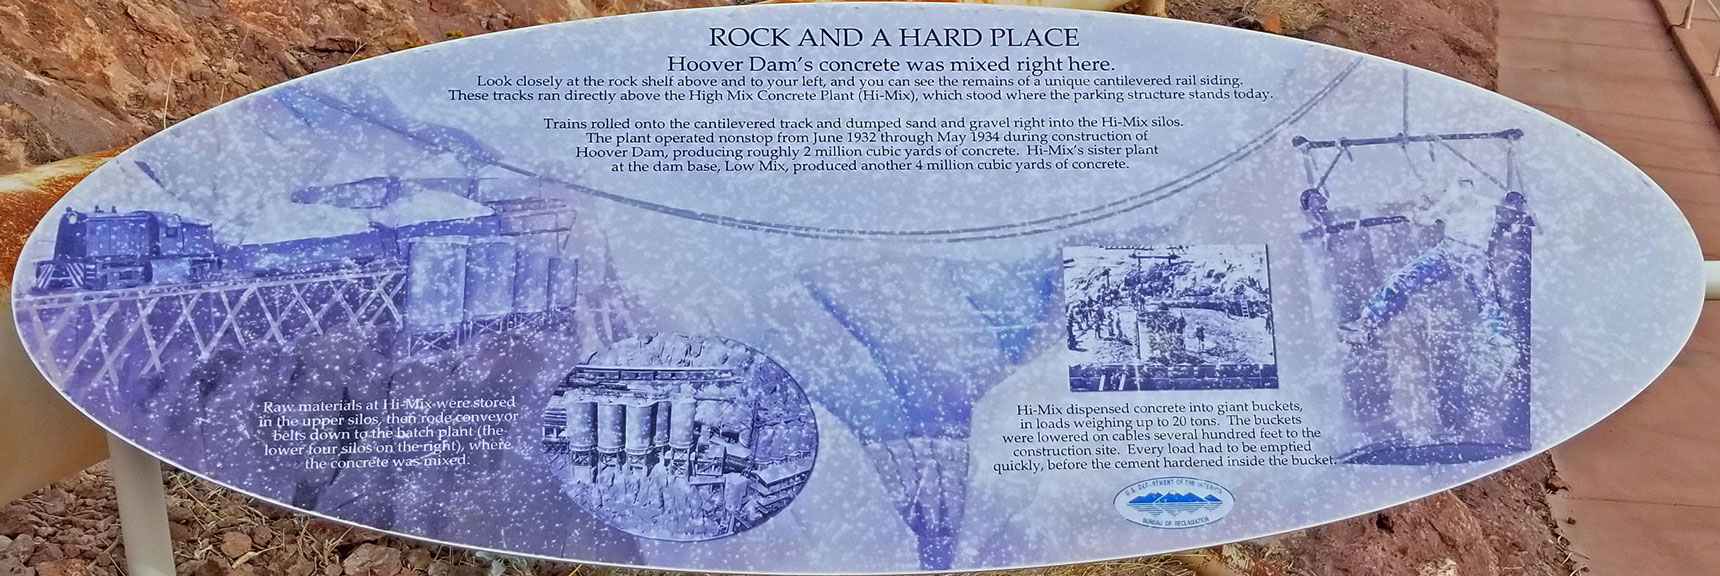 Interpretive Sign Describing the Concrete Mixing Operation | Historic Railroad Trail | Lake Mead National Recreation Area, Nevada